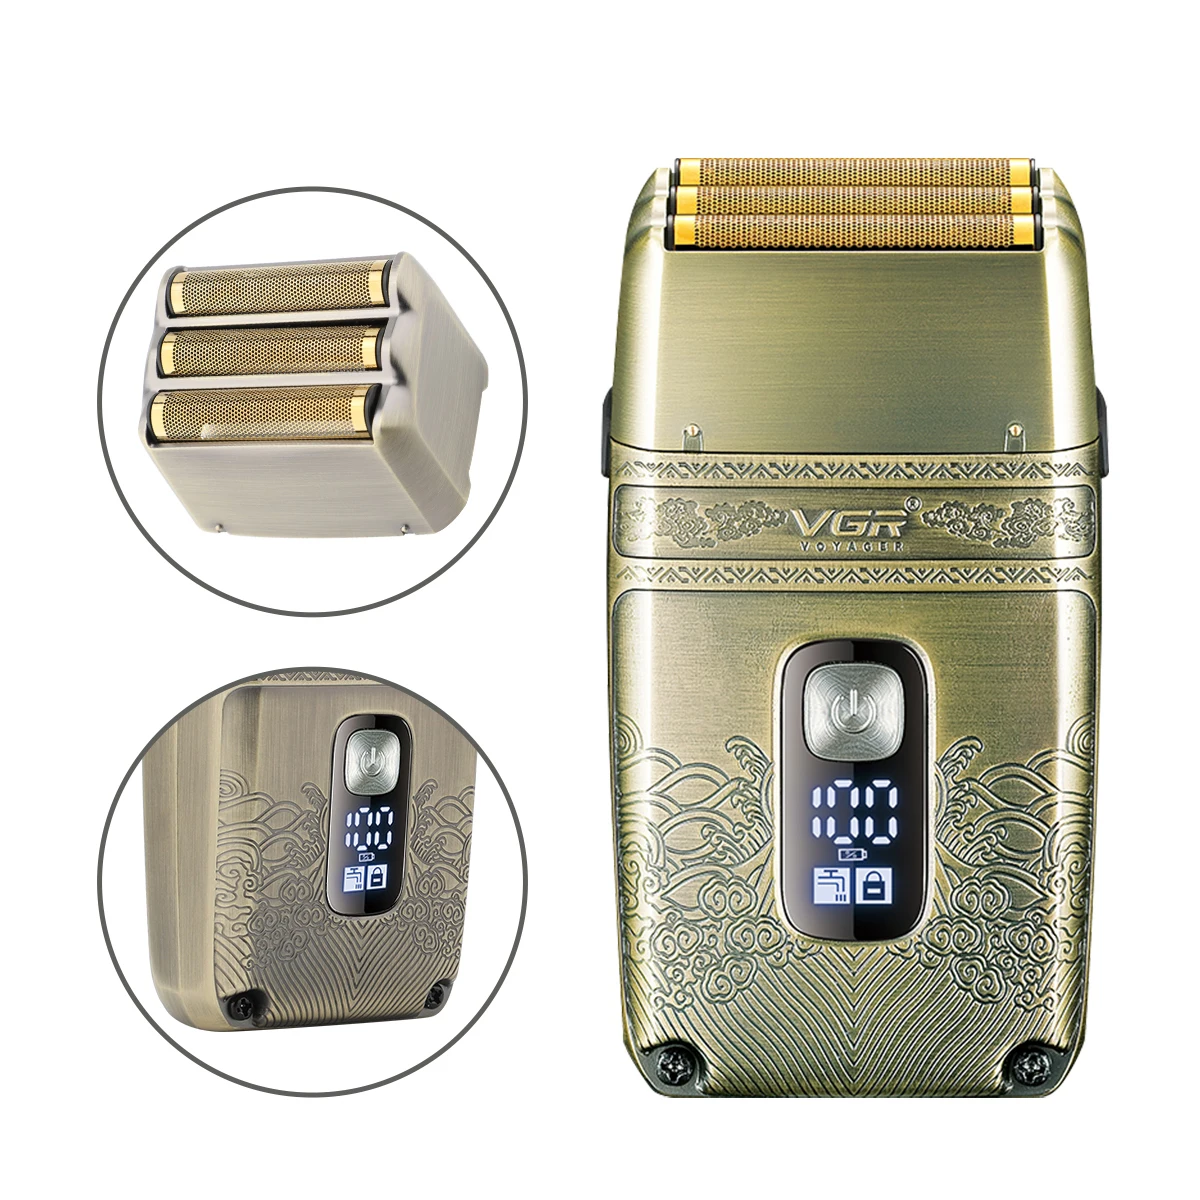 

VGR V-335 shaving machine Washable IPX6 Rechargeable Professional Electric Foil Shaver for Men